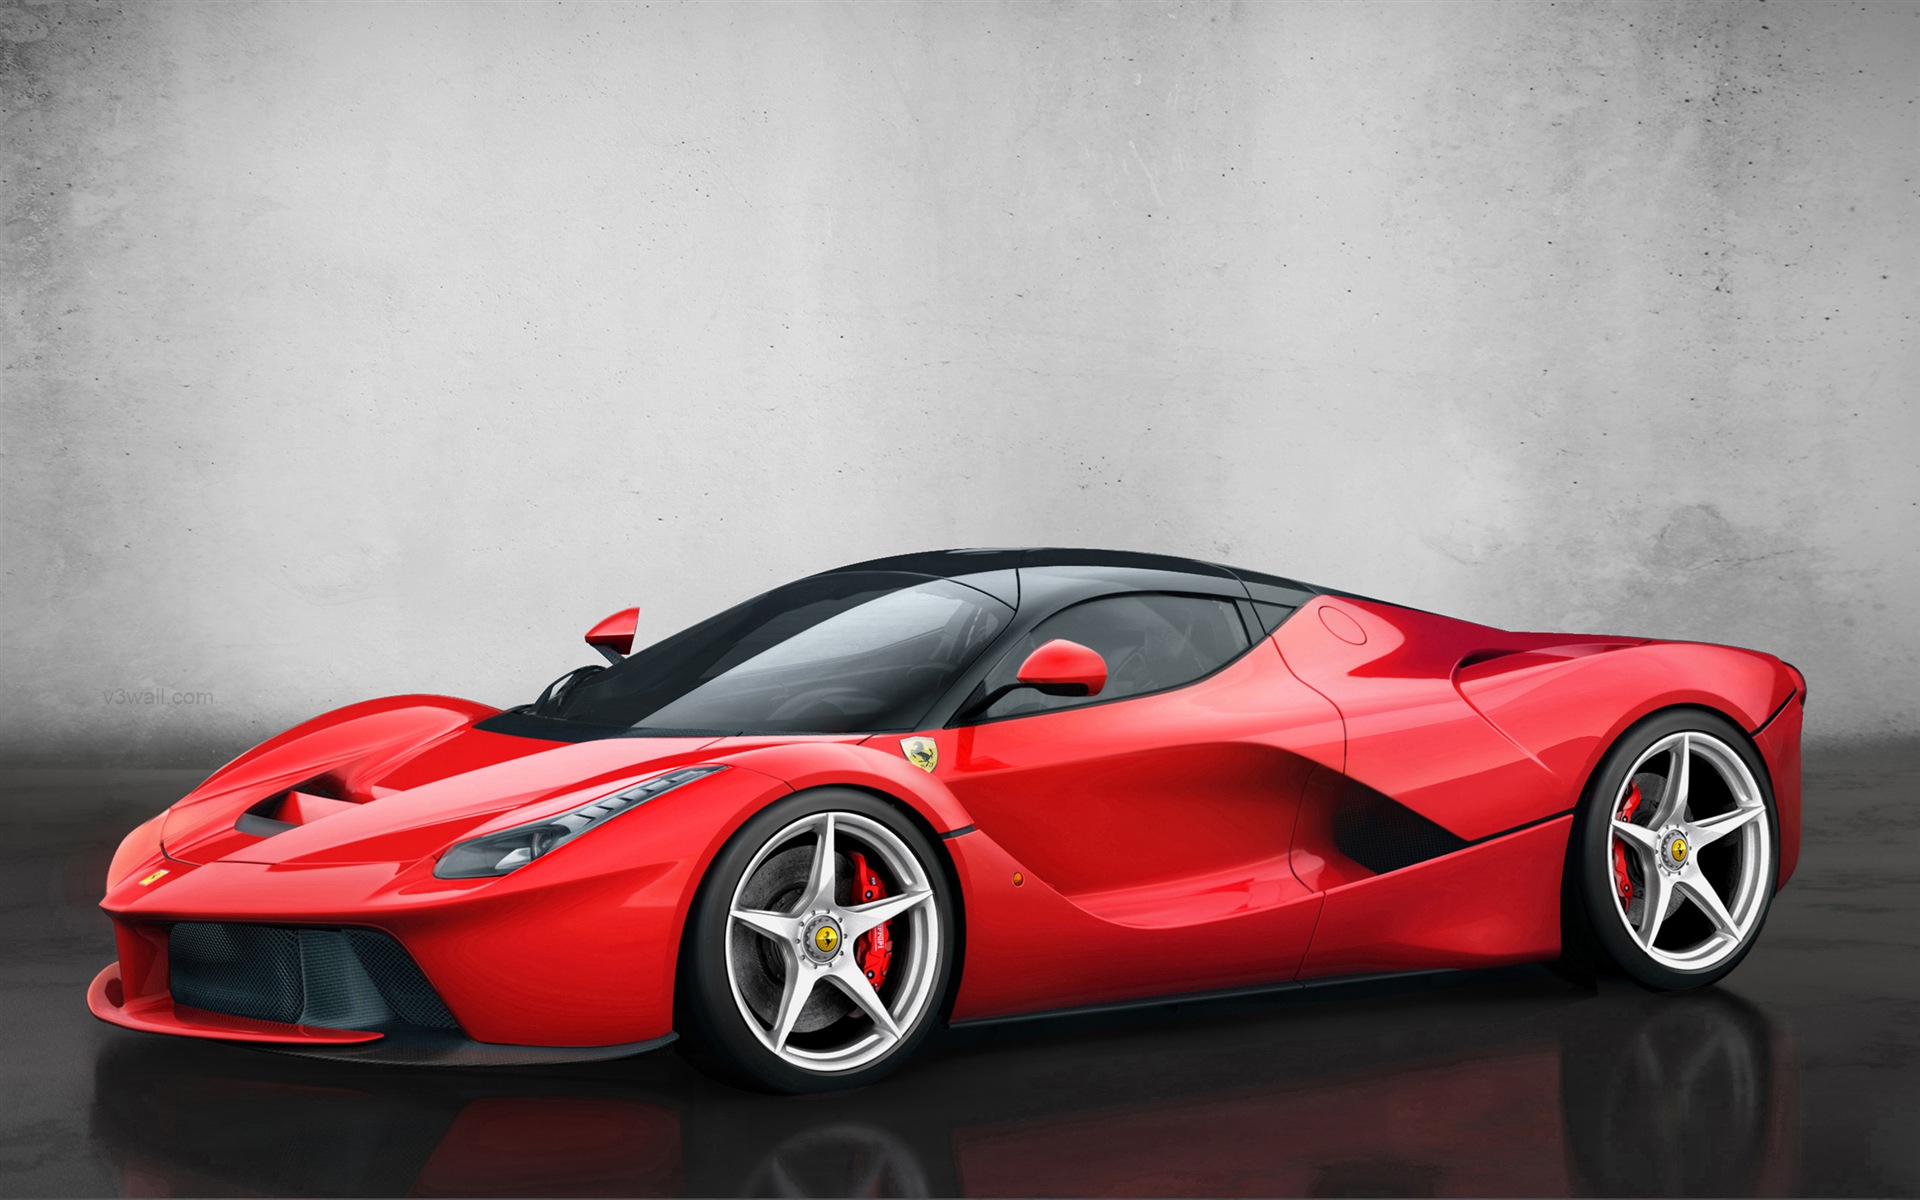 2013 Ferrari LaFerrari red supercar HD Wallpaper #7 - 1920x1200